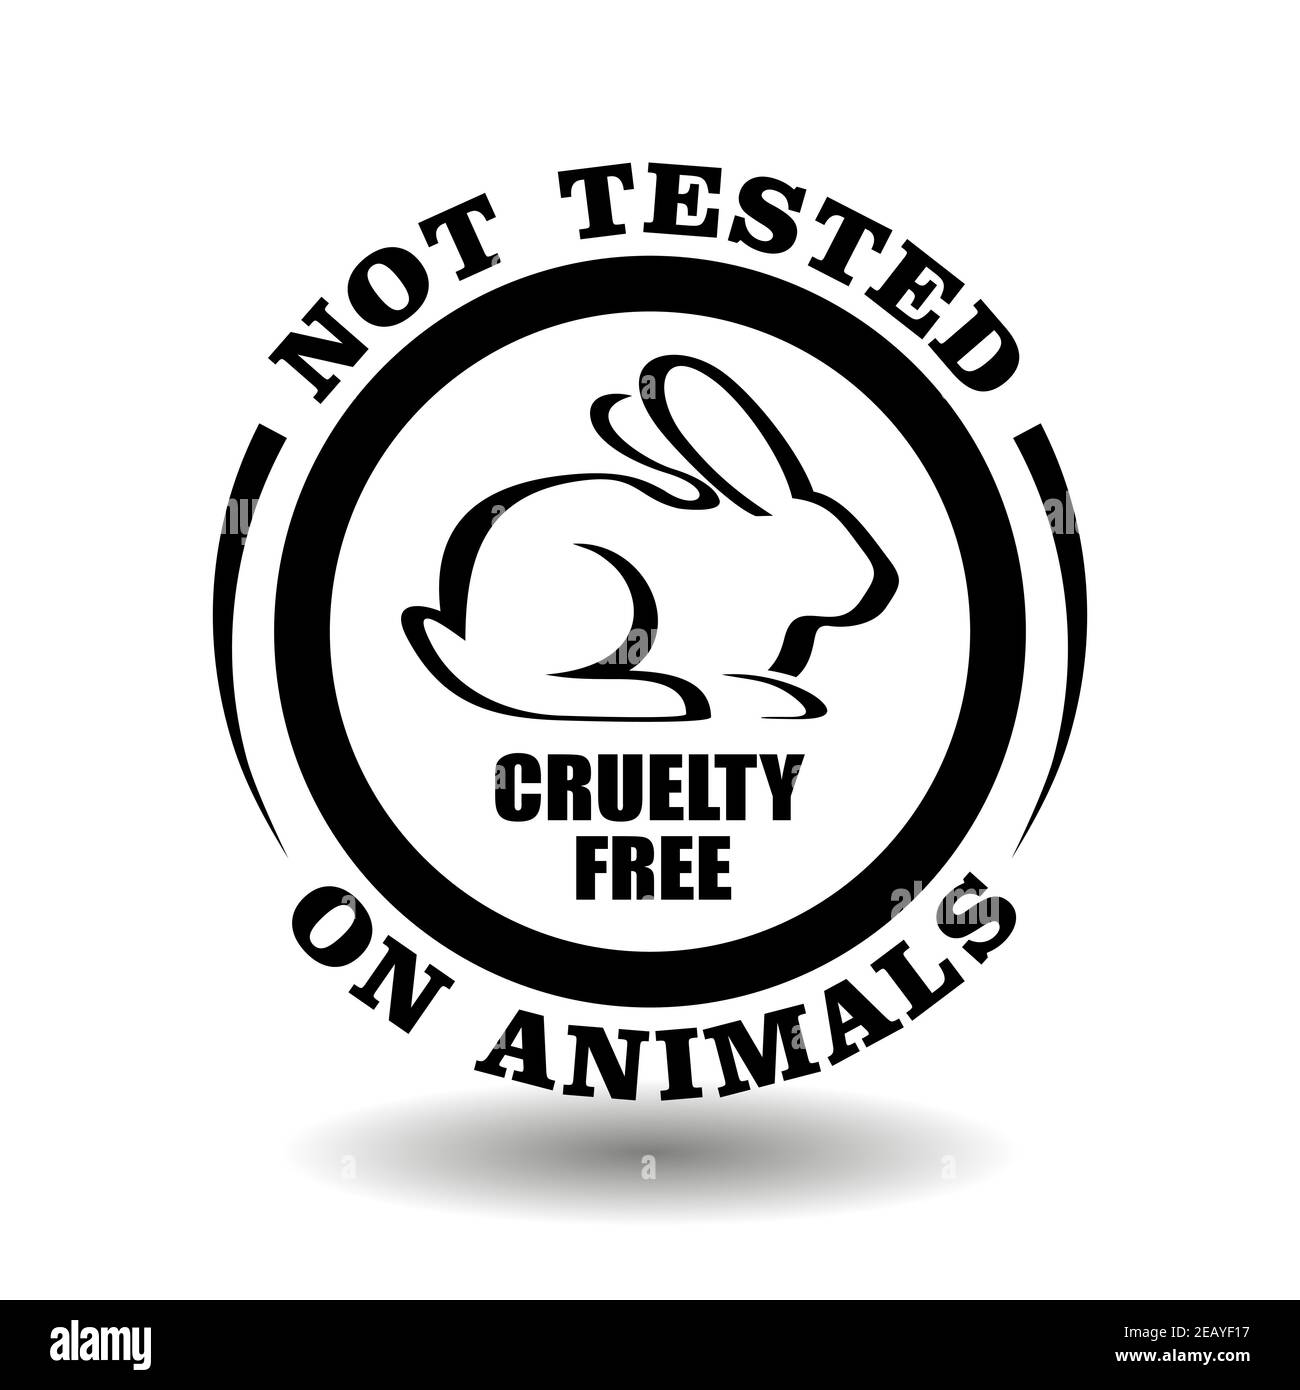 Cruelty free logo Stock Vector Images - Alamy